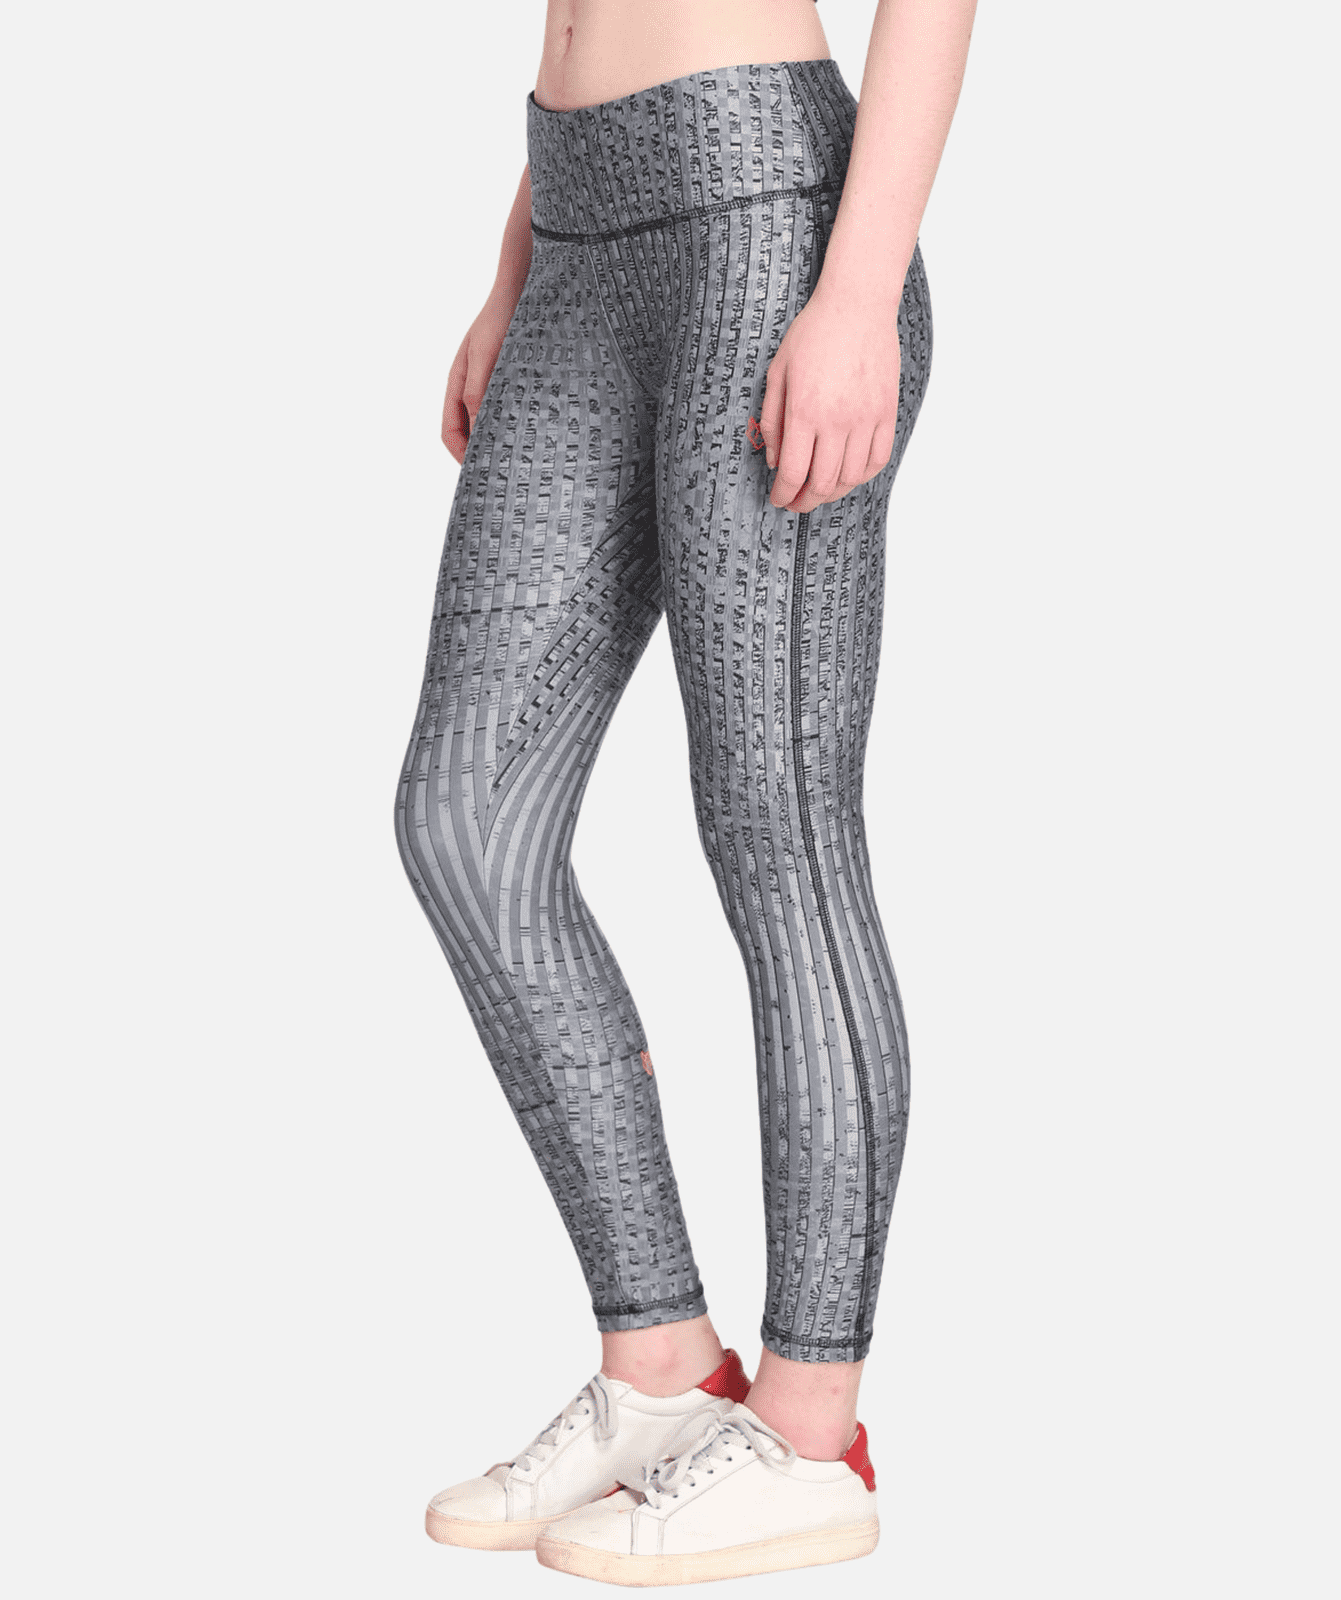 Printed Lycra Gym Wear Pants for Girls, Uptown Fashion